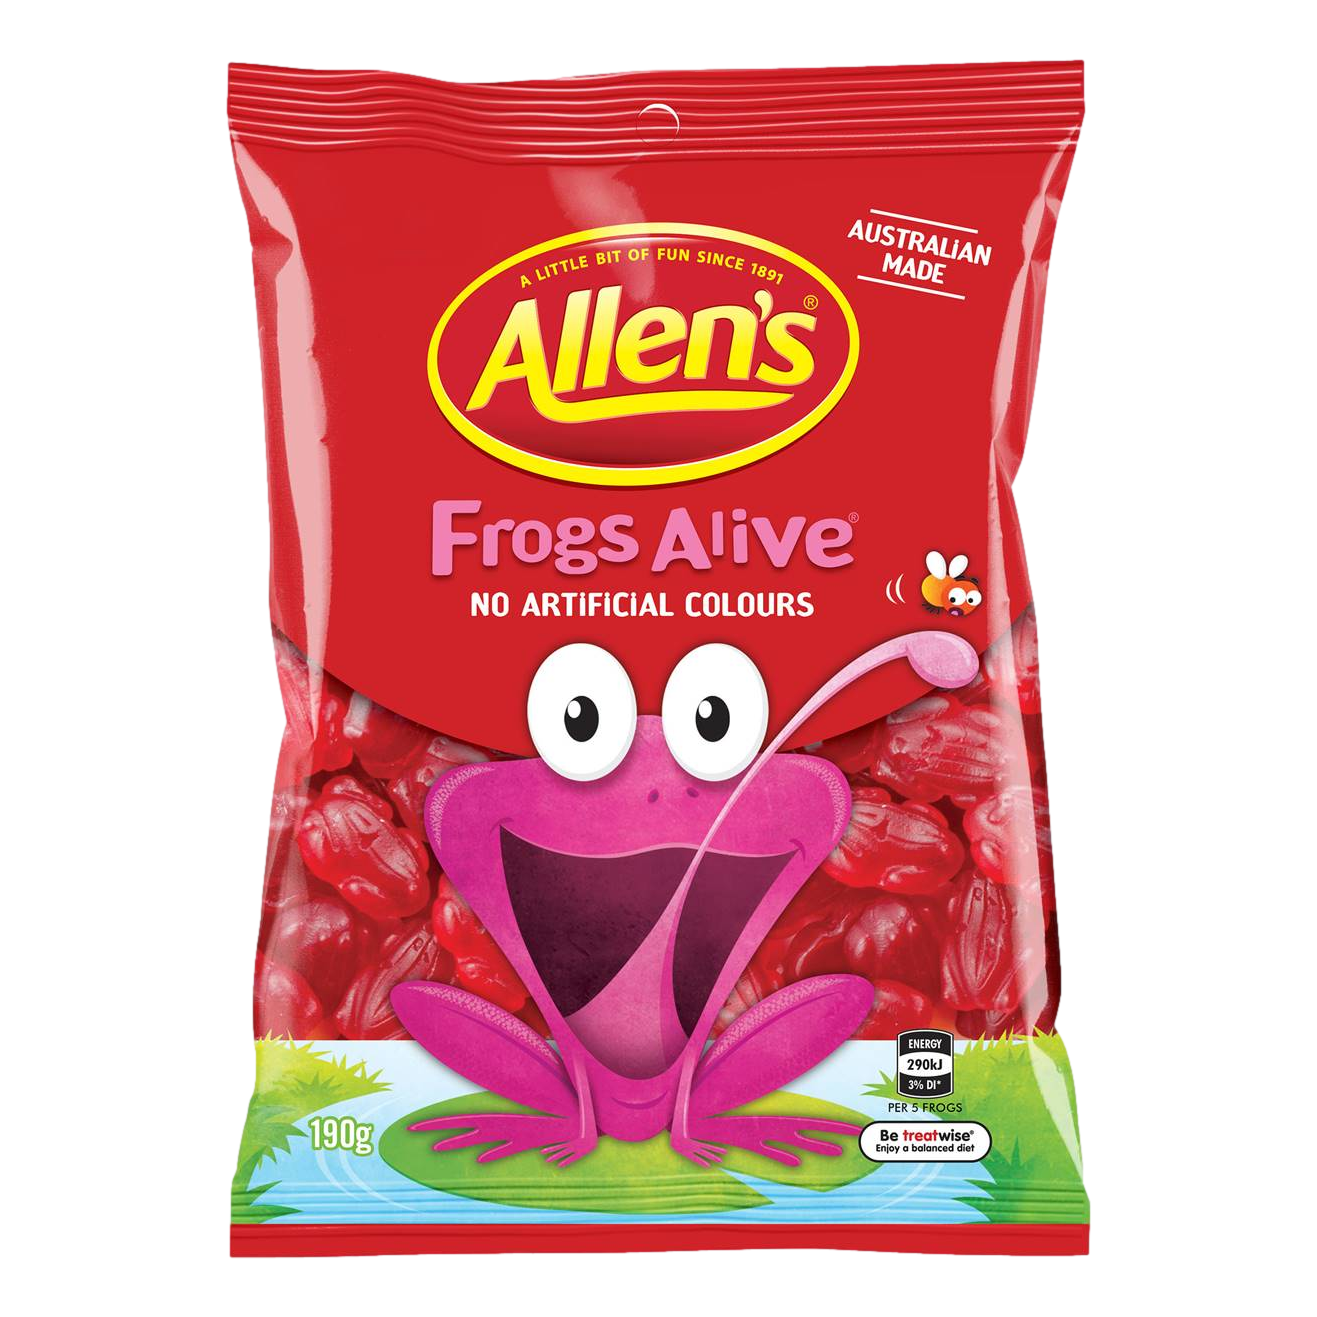 Allen's Frogs Alive Lolly Bag 190g